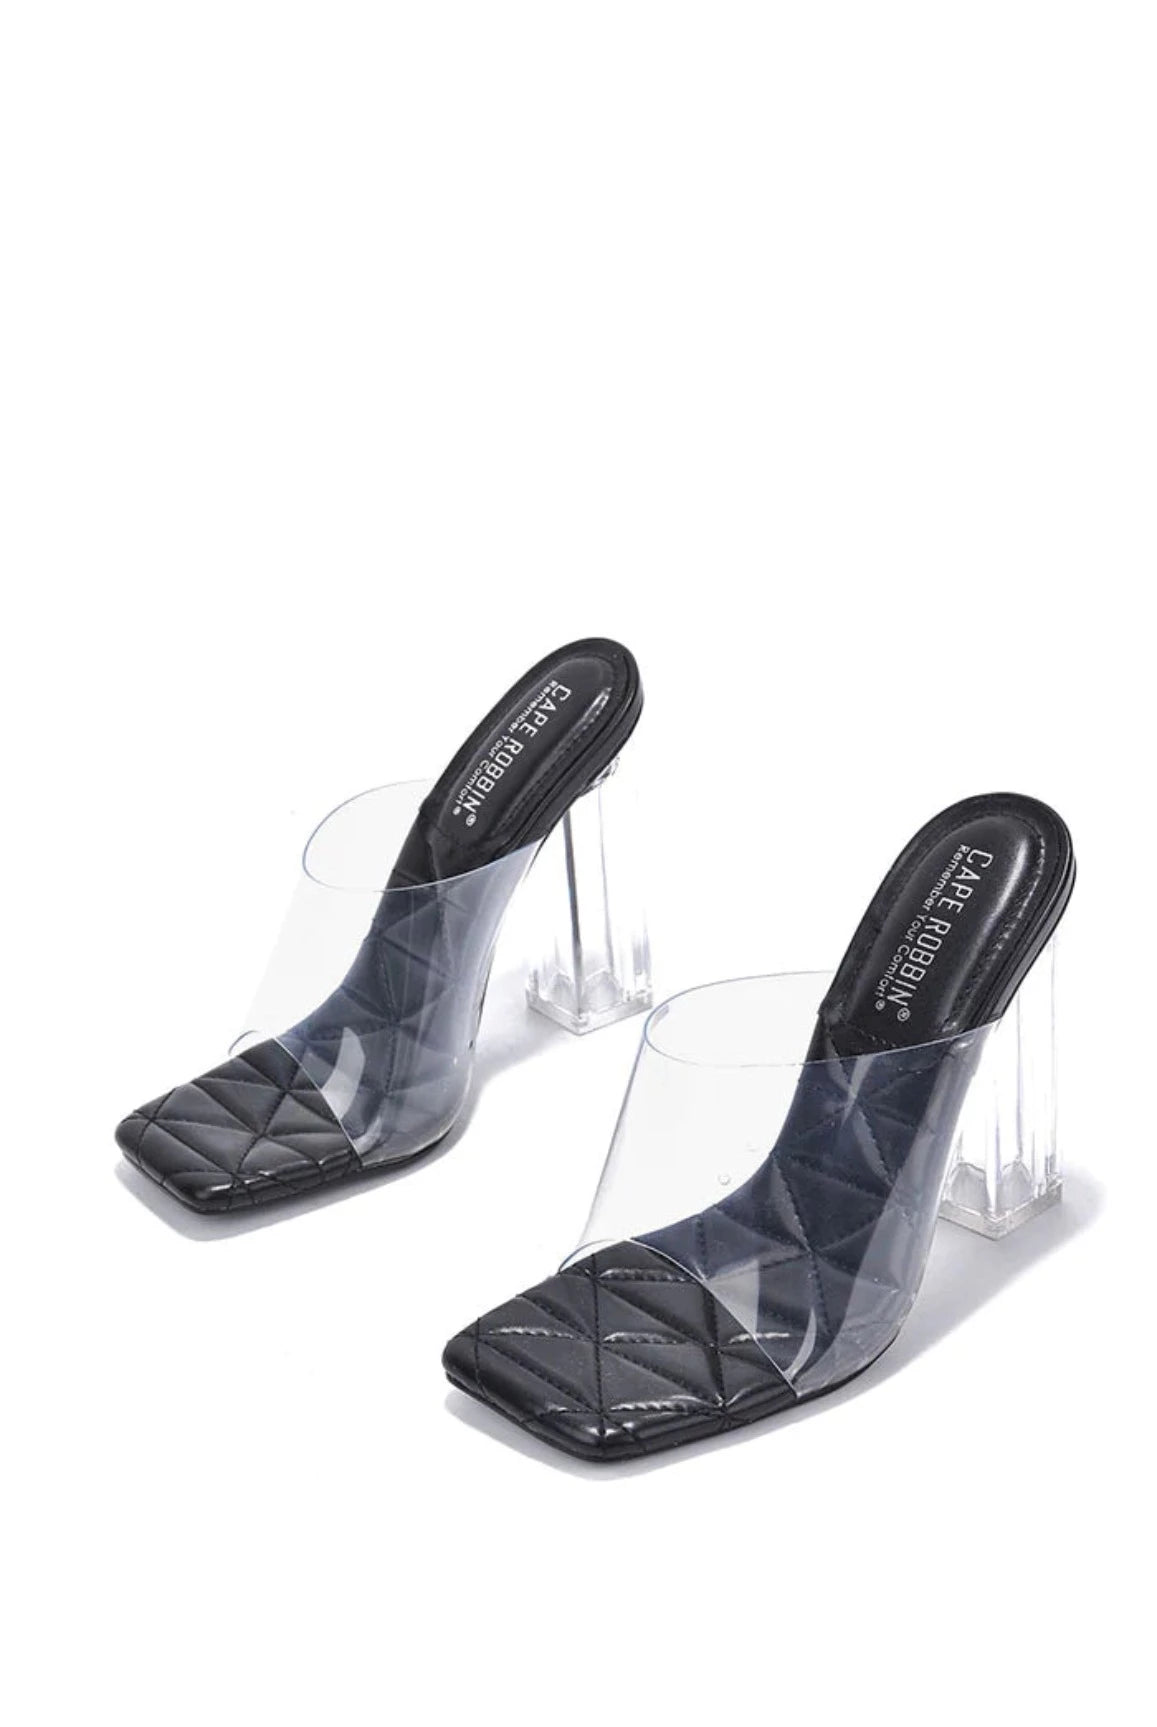 Pensy.....Clear Sandal Heels Cape Robbin Shoes